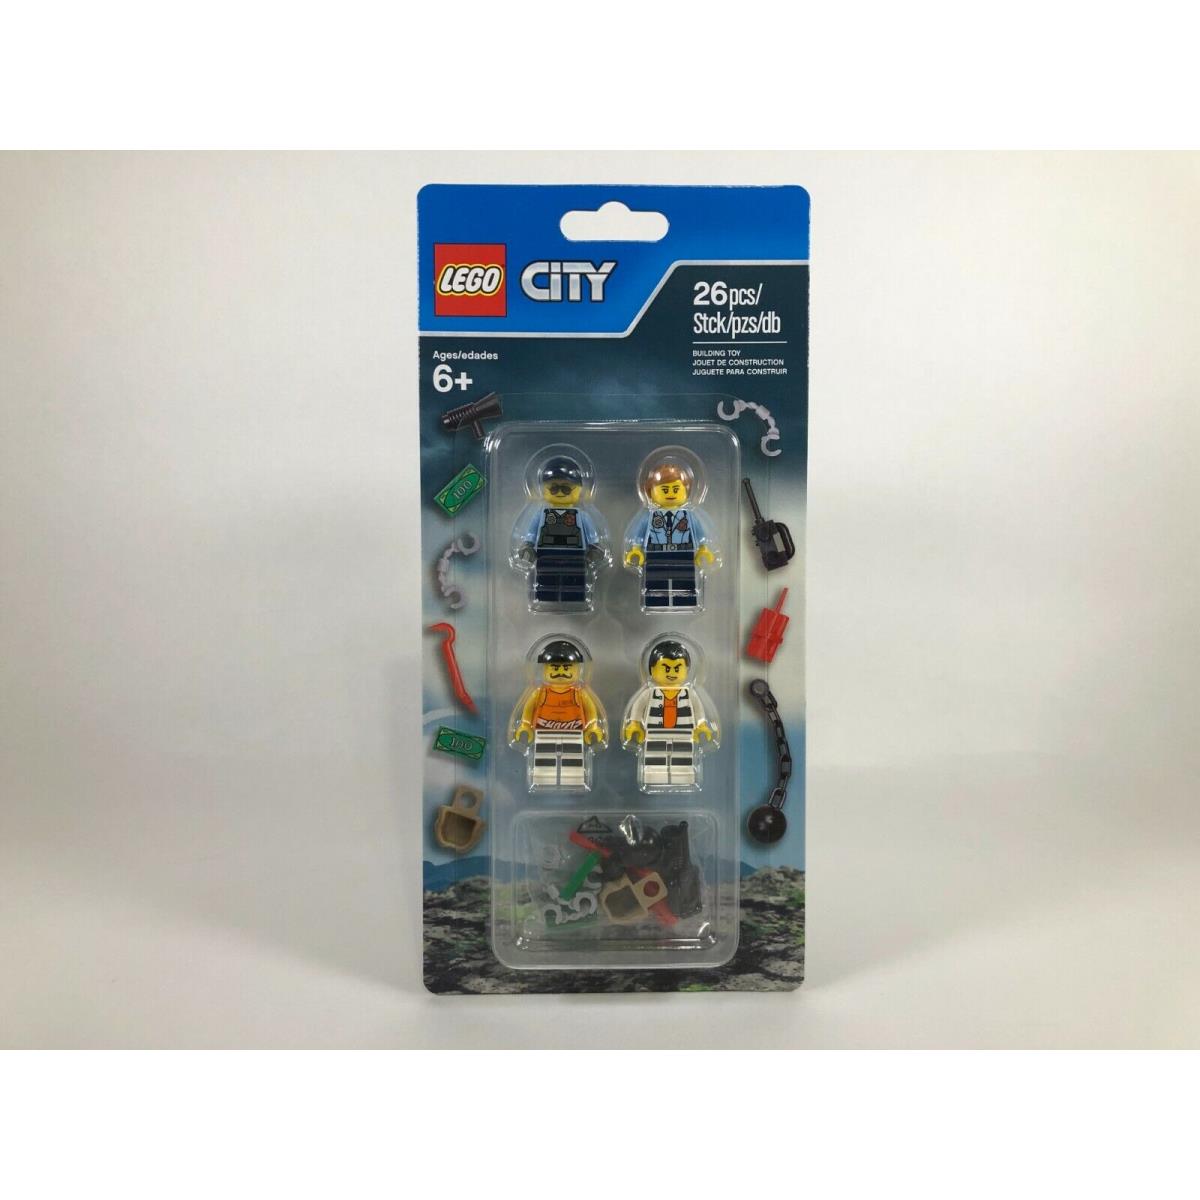 Lego City 853570 Police Accessory Set - - - Retired